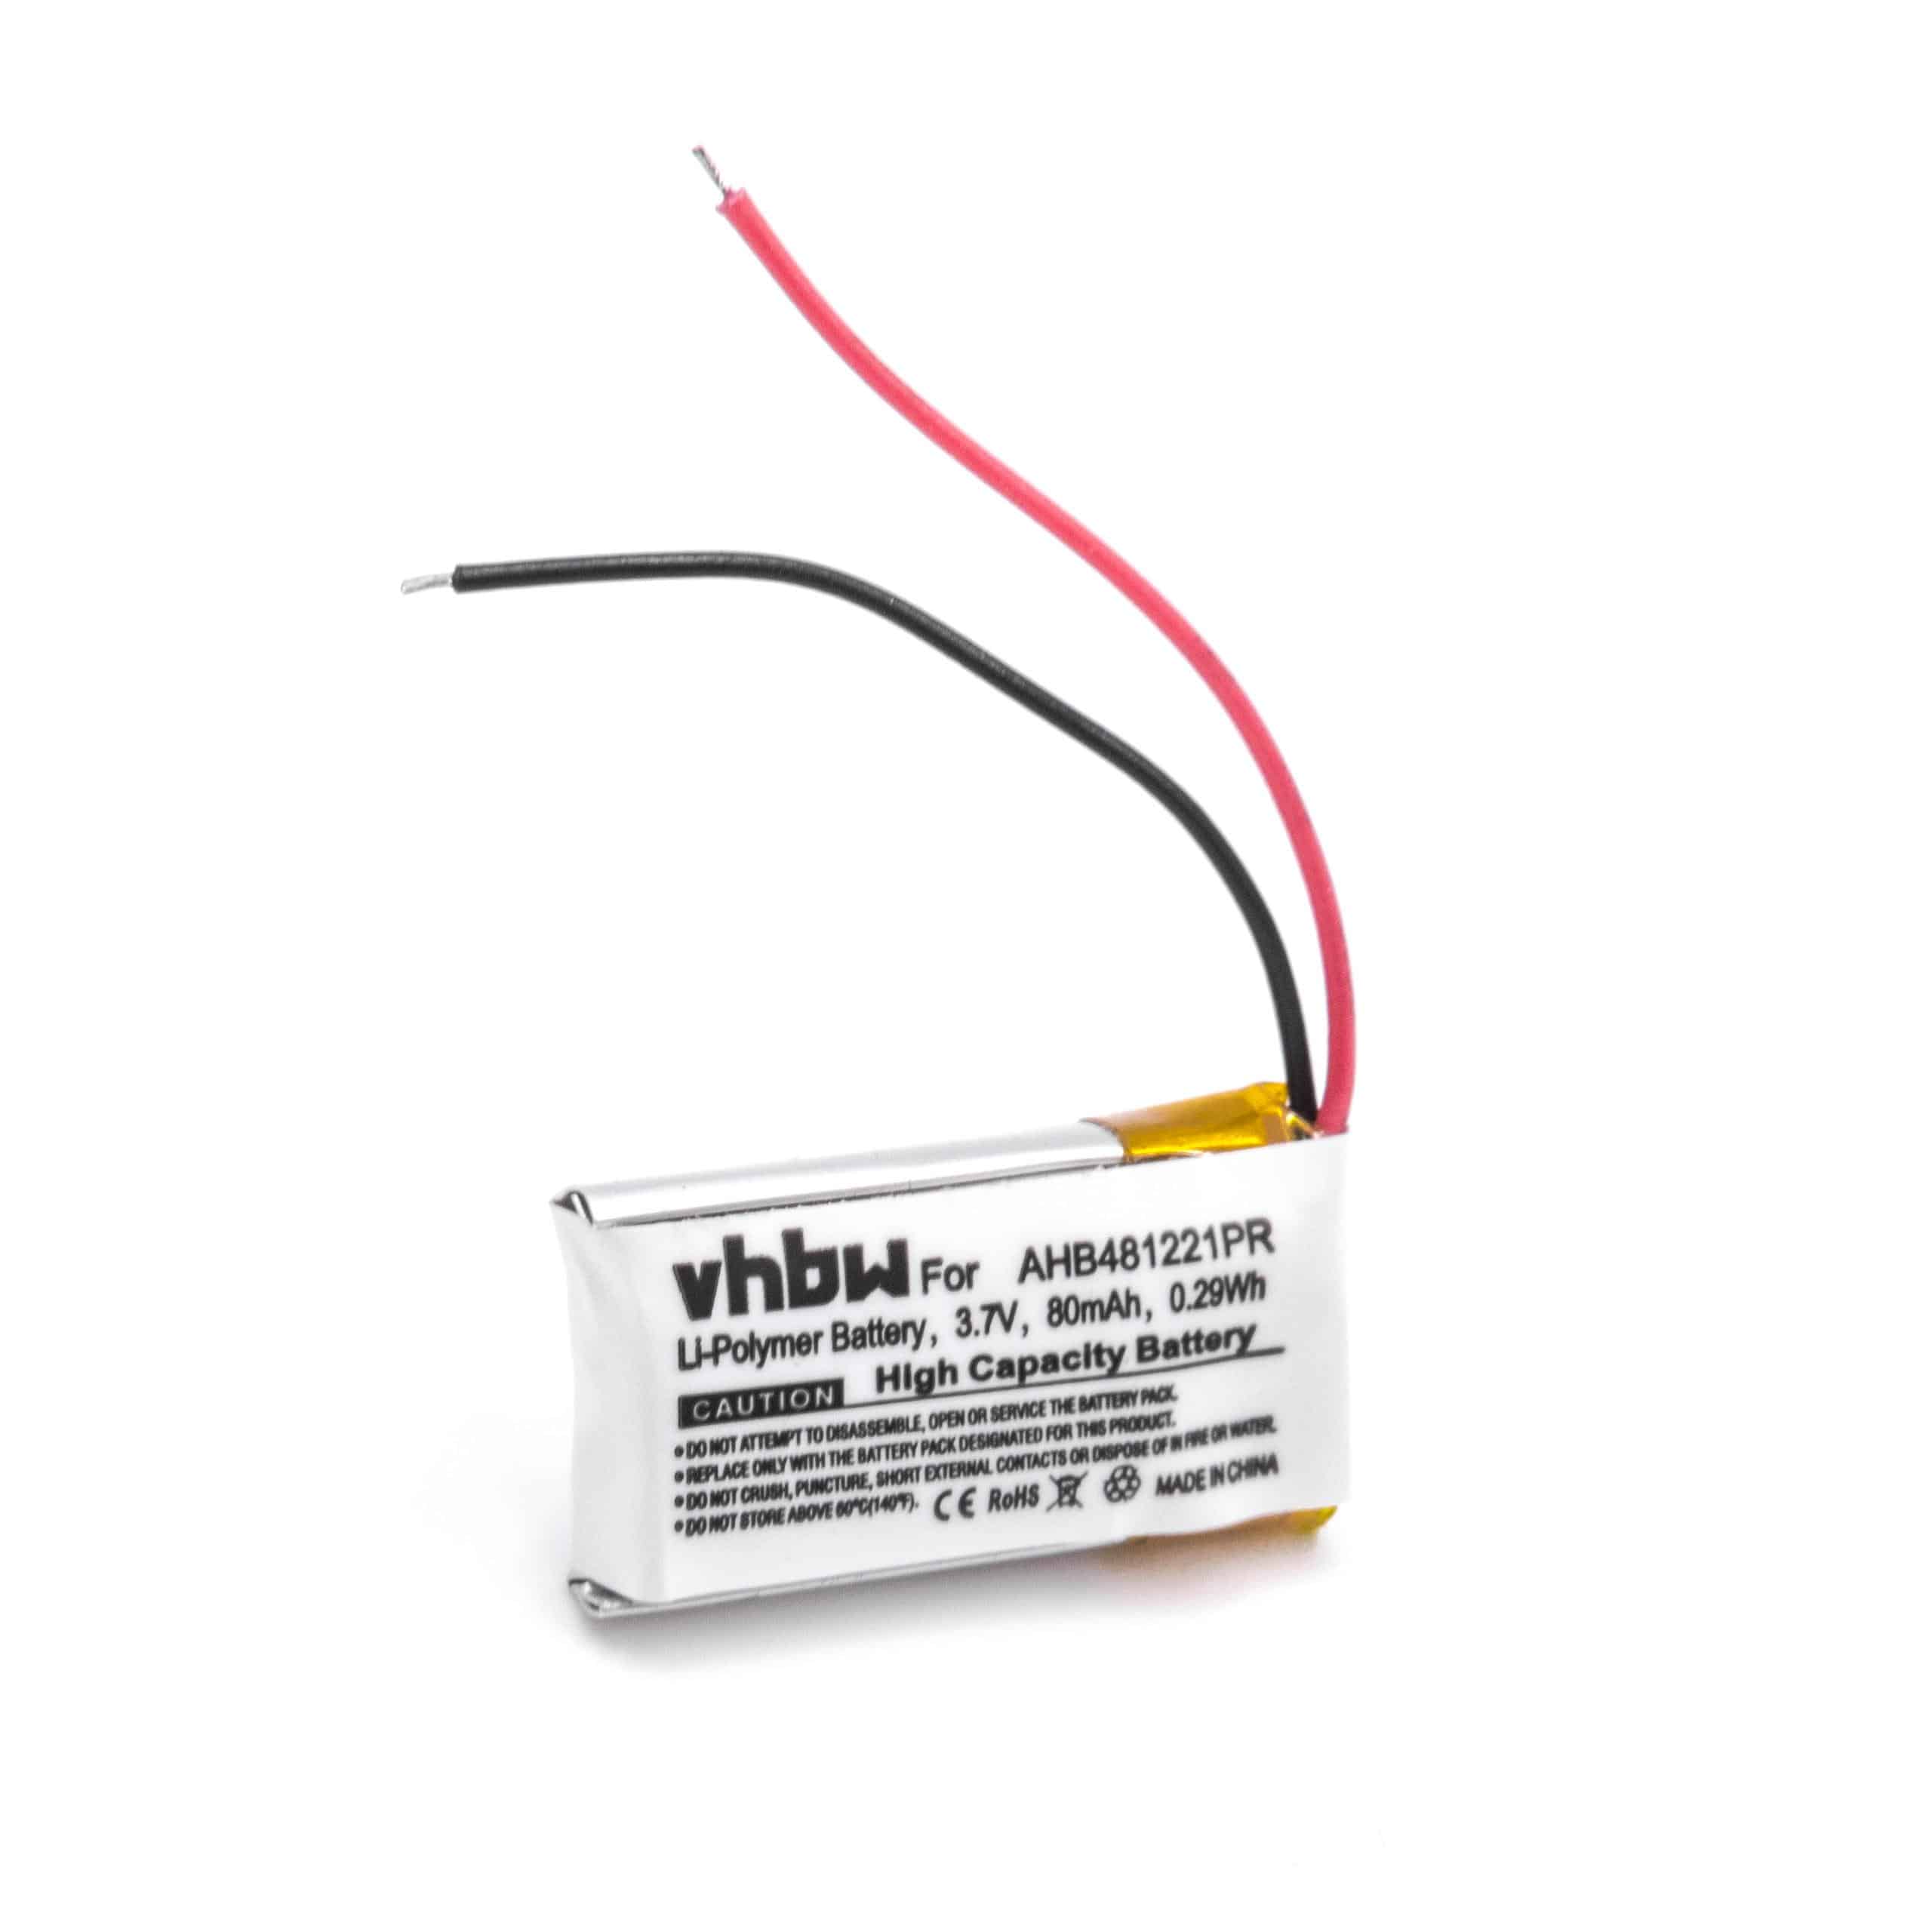 Wireless Headset Battery Replacement for Bose AHB481221PR - 80mAh 3.7V Li-polymer